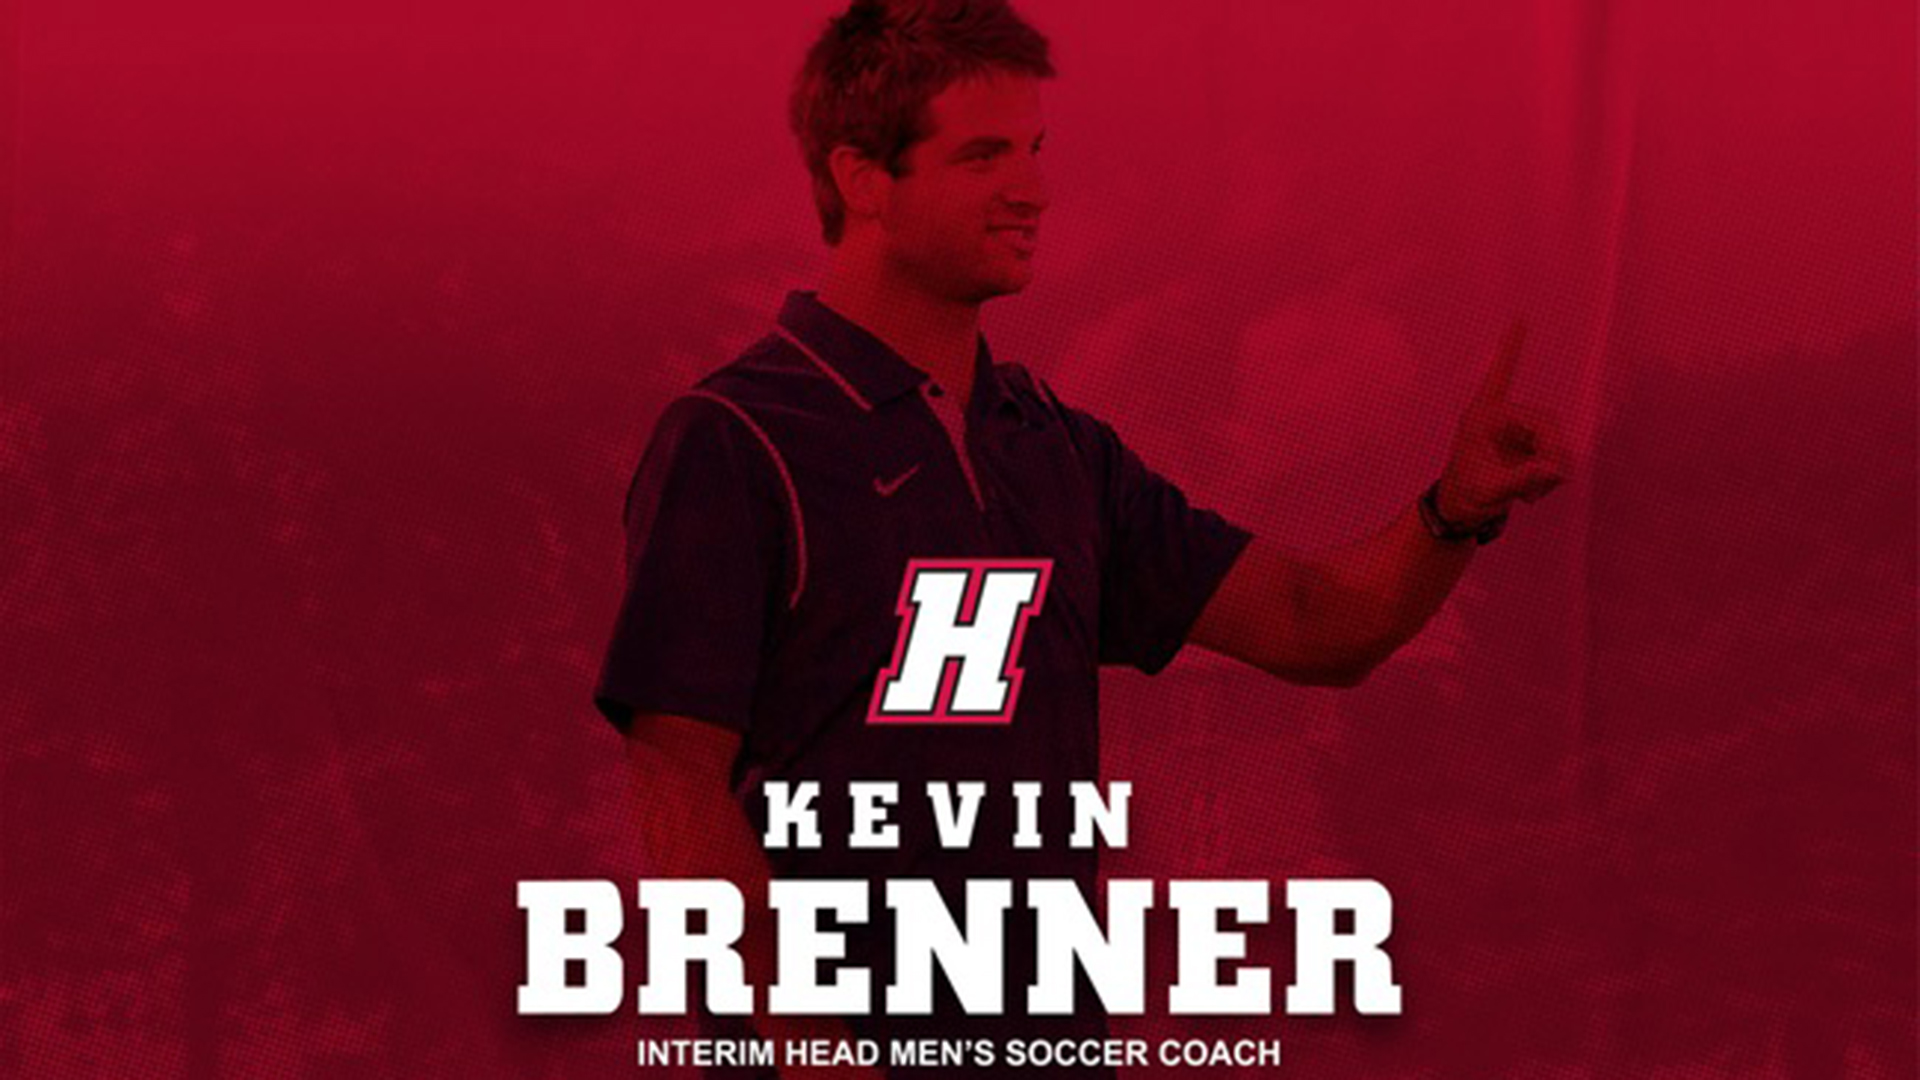 Brenner Named Interim Head Men's Soccer Coach at Haverford